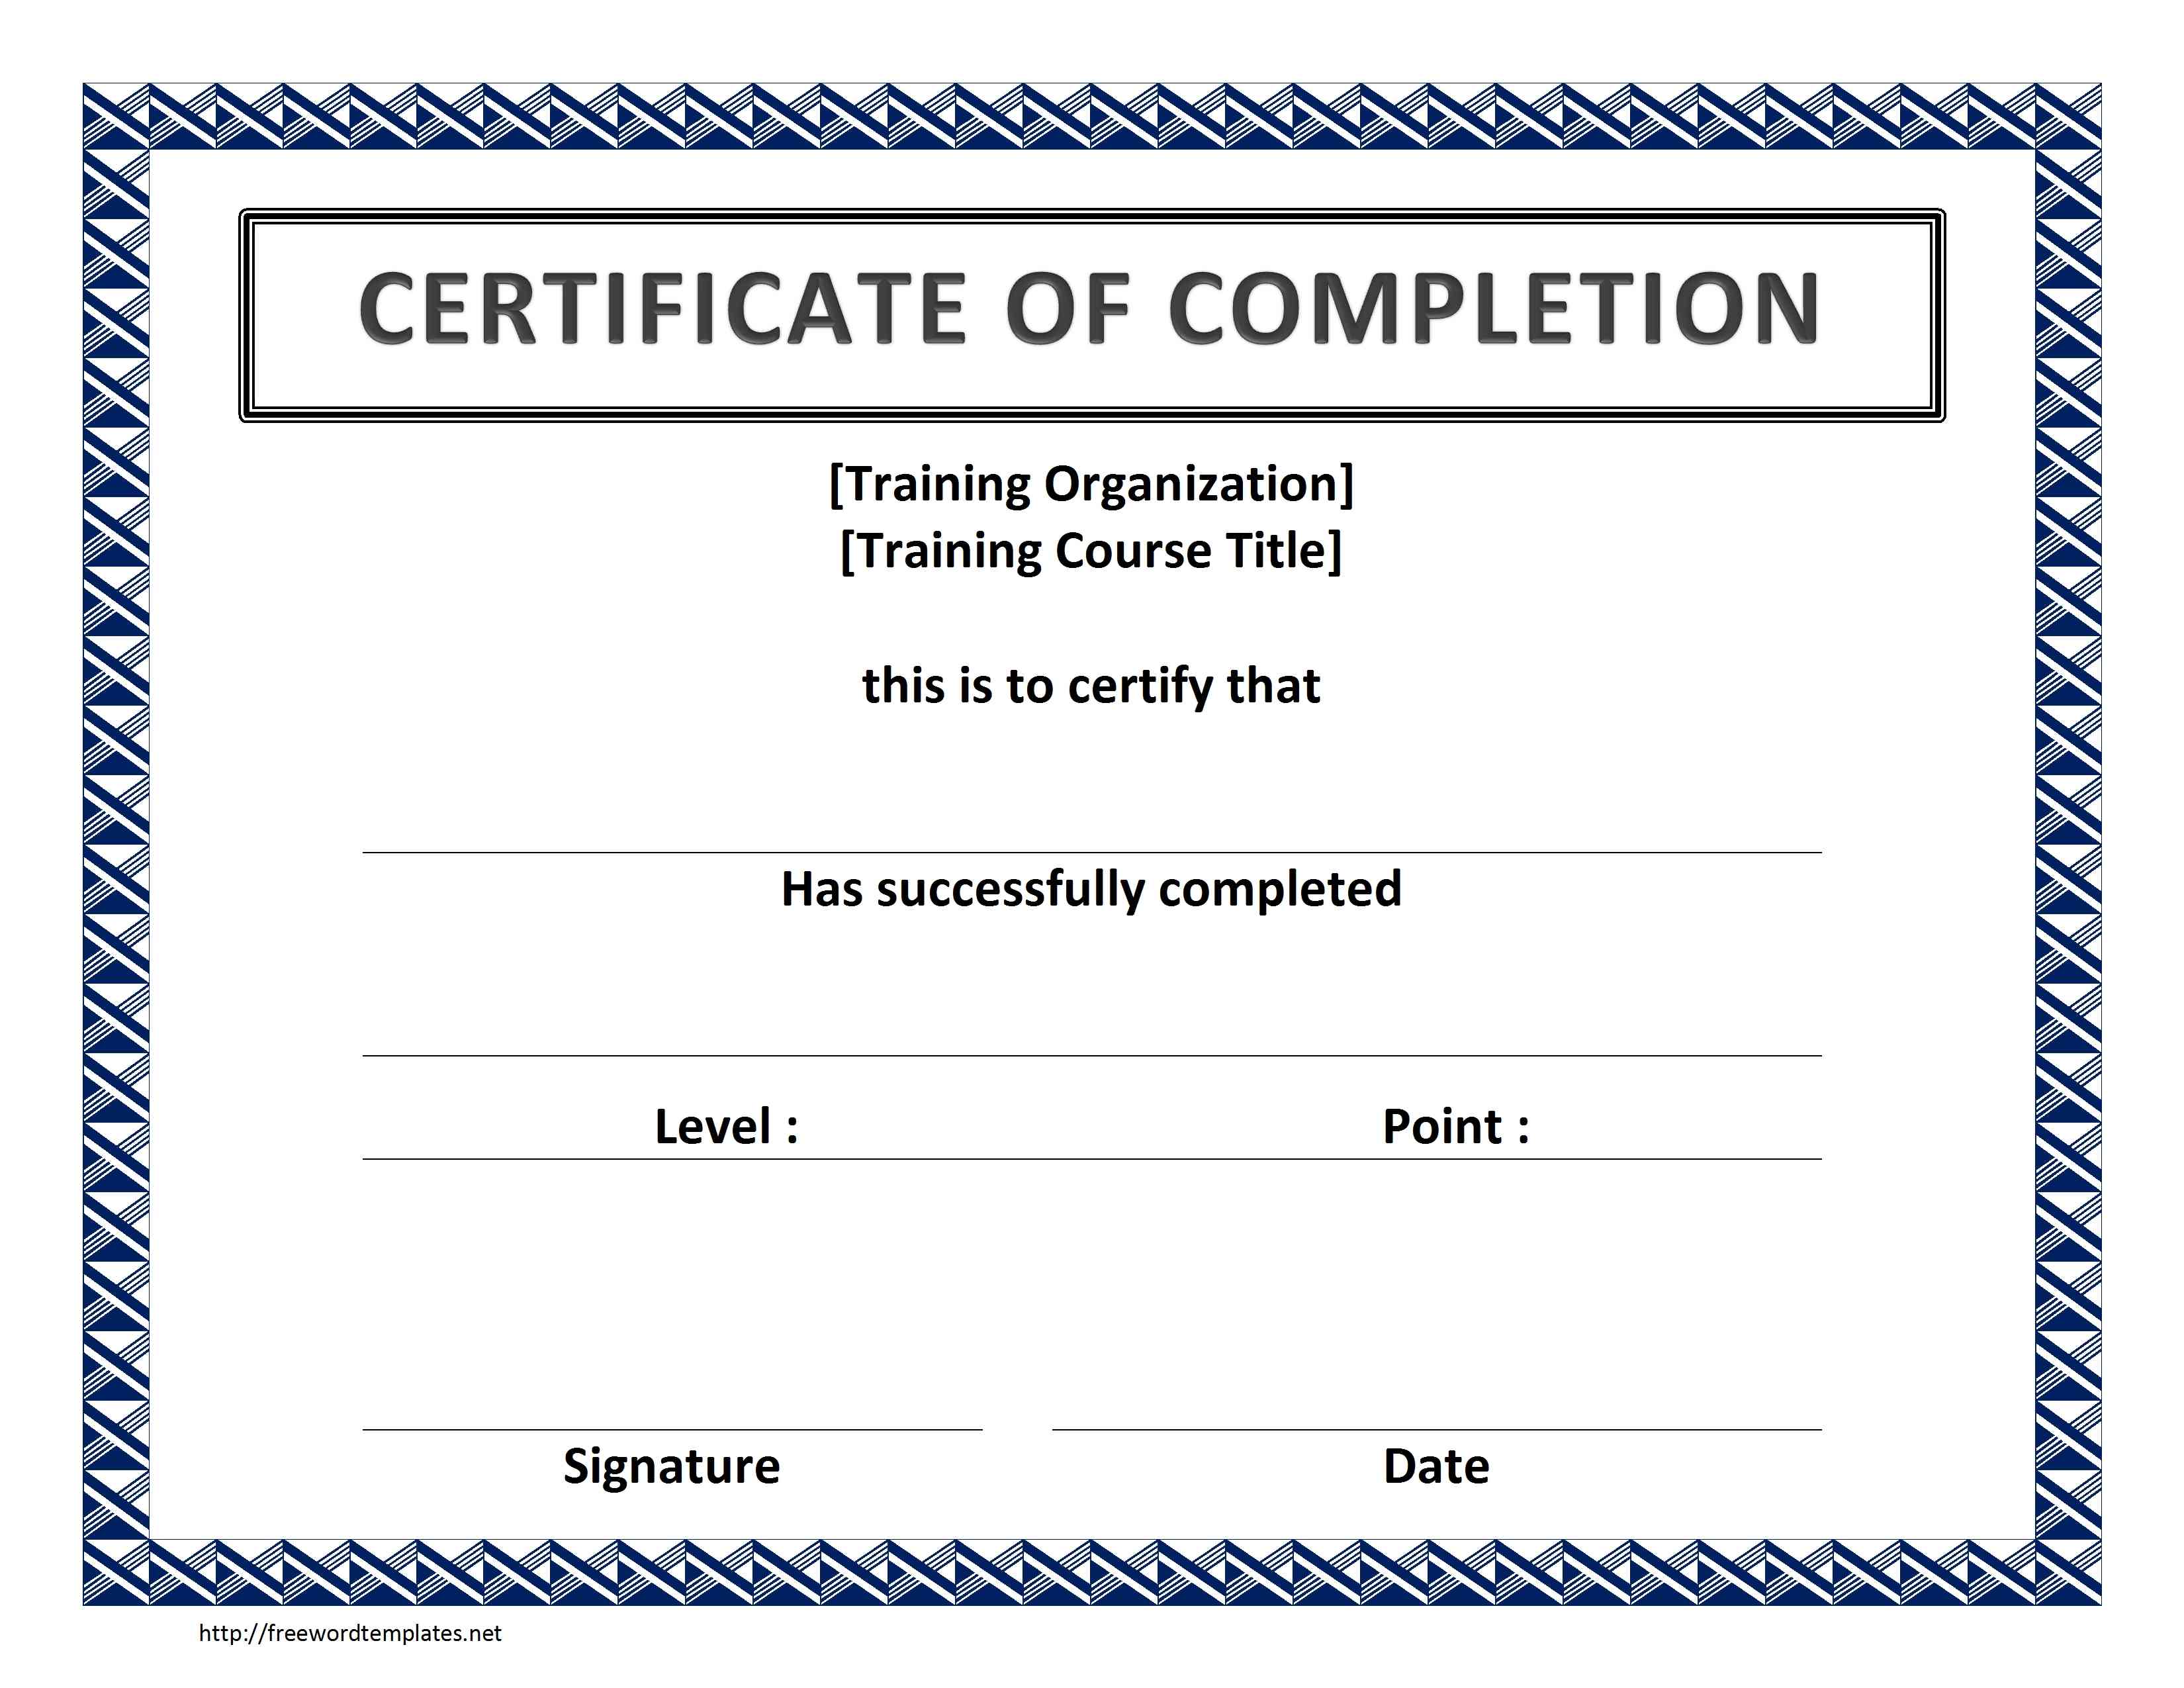 training-certificate-template